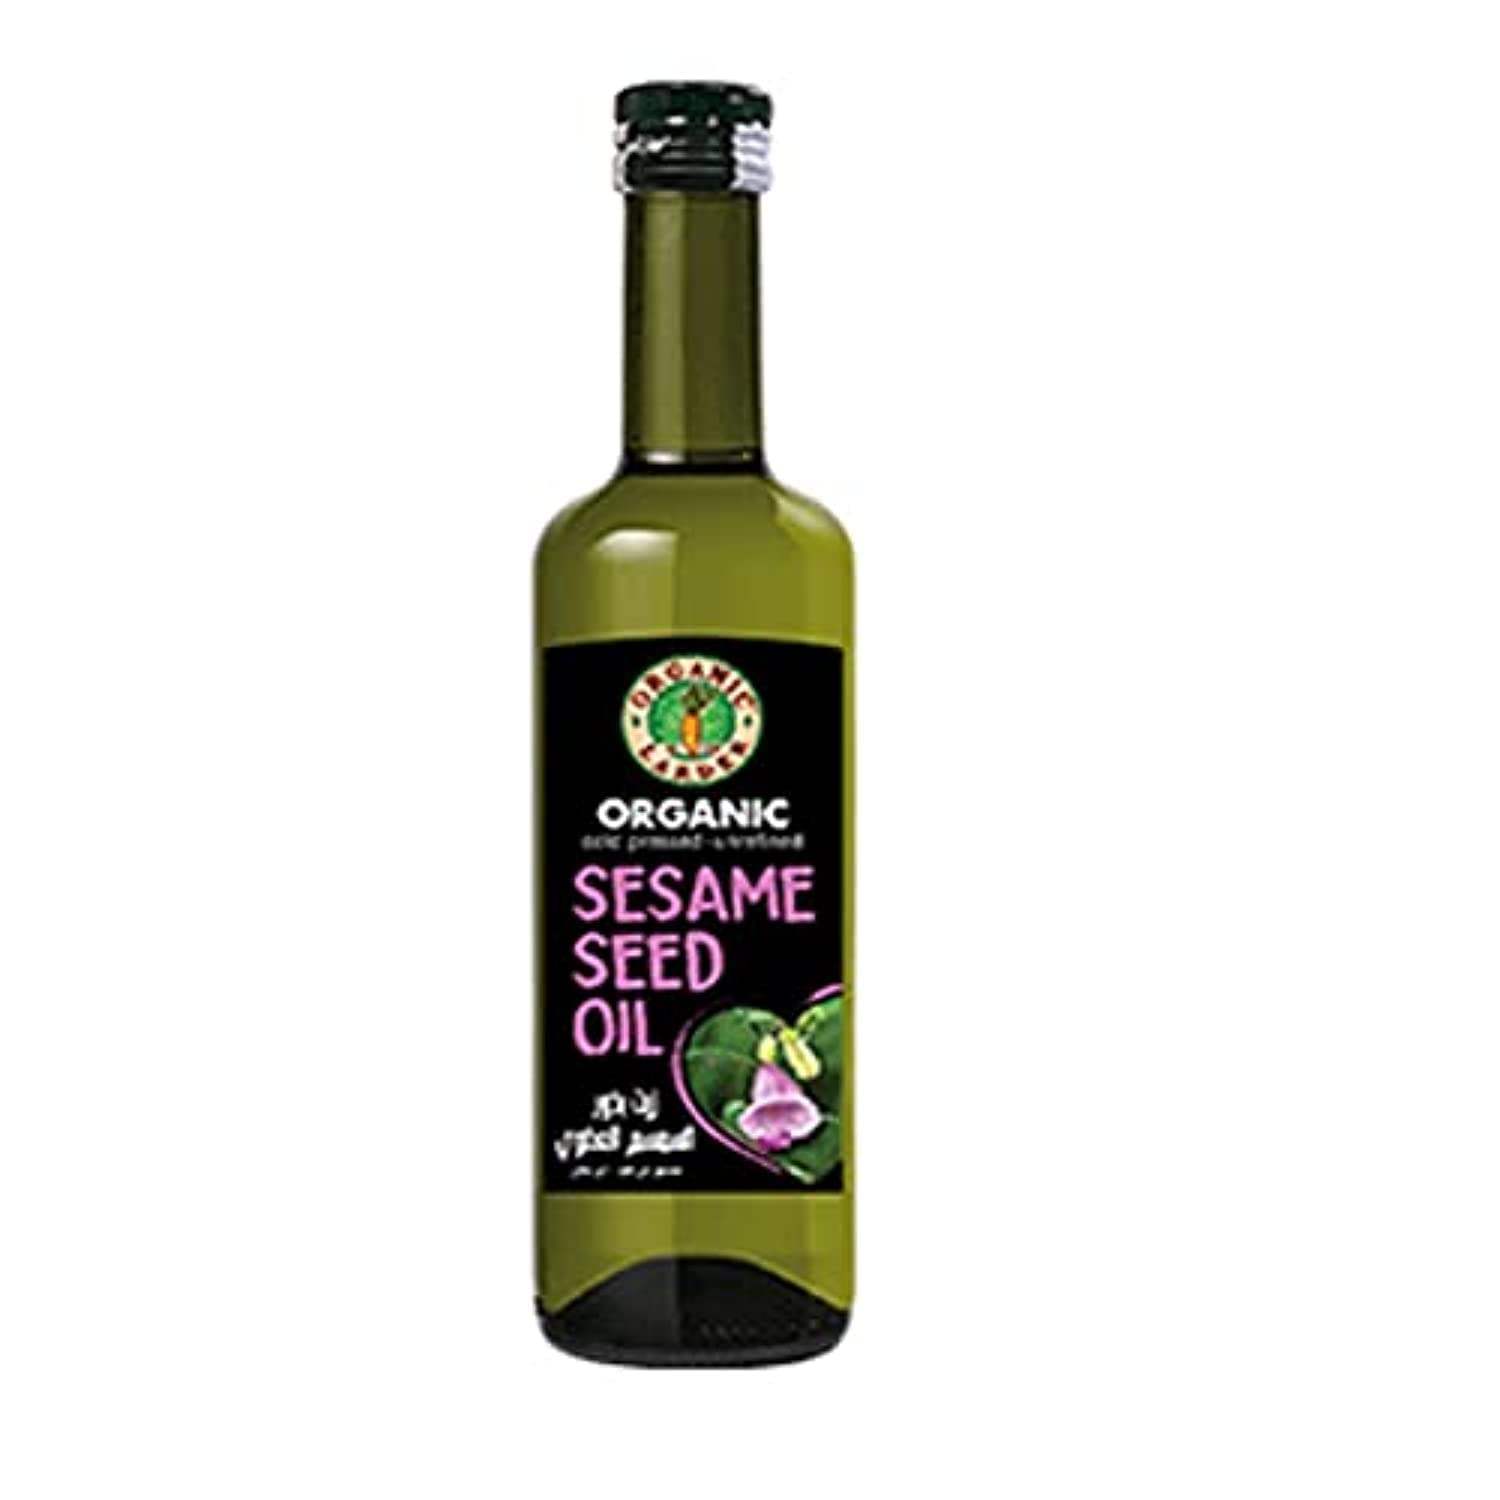 Organic Larder Sesame Seed Oil, Cold Pressed, Unrefined, 500ml - Organic, Vegan